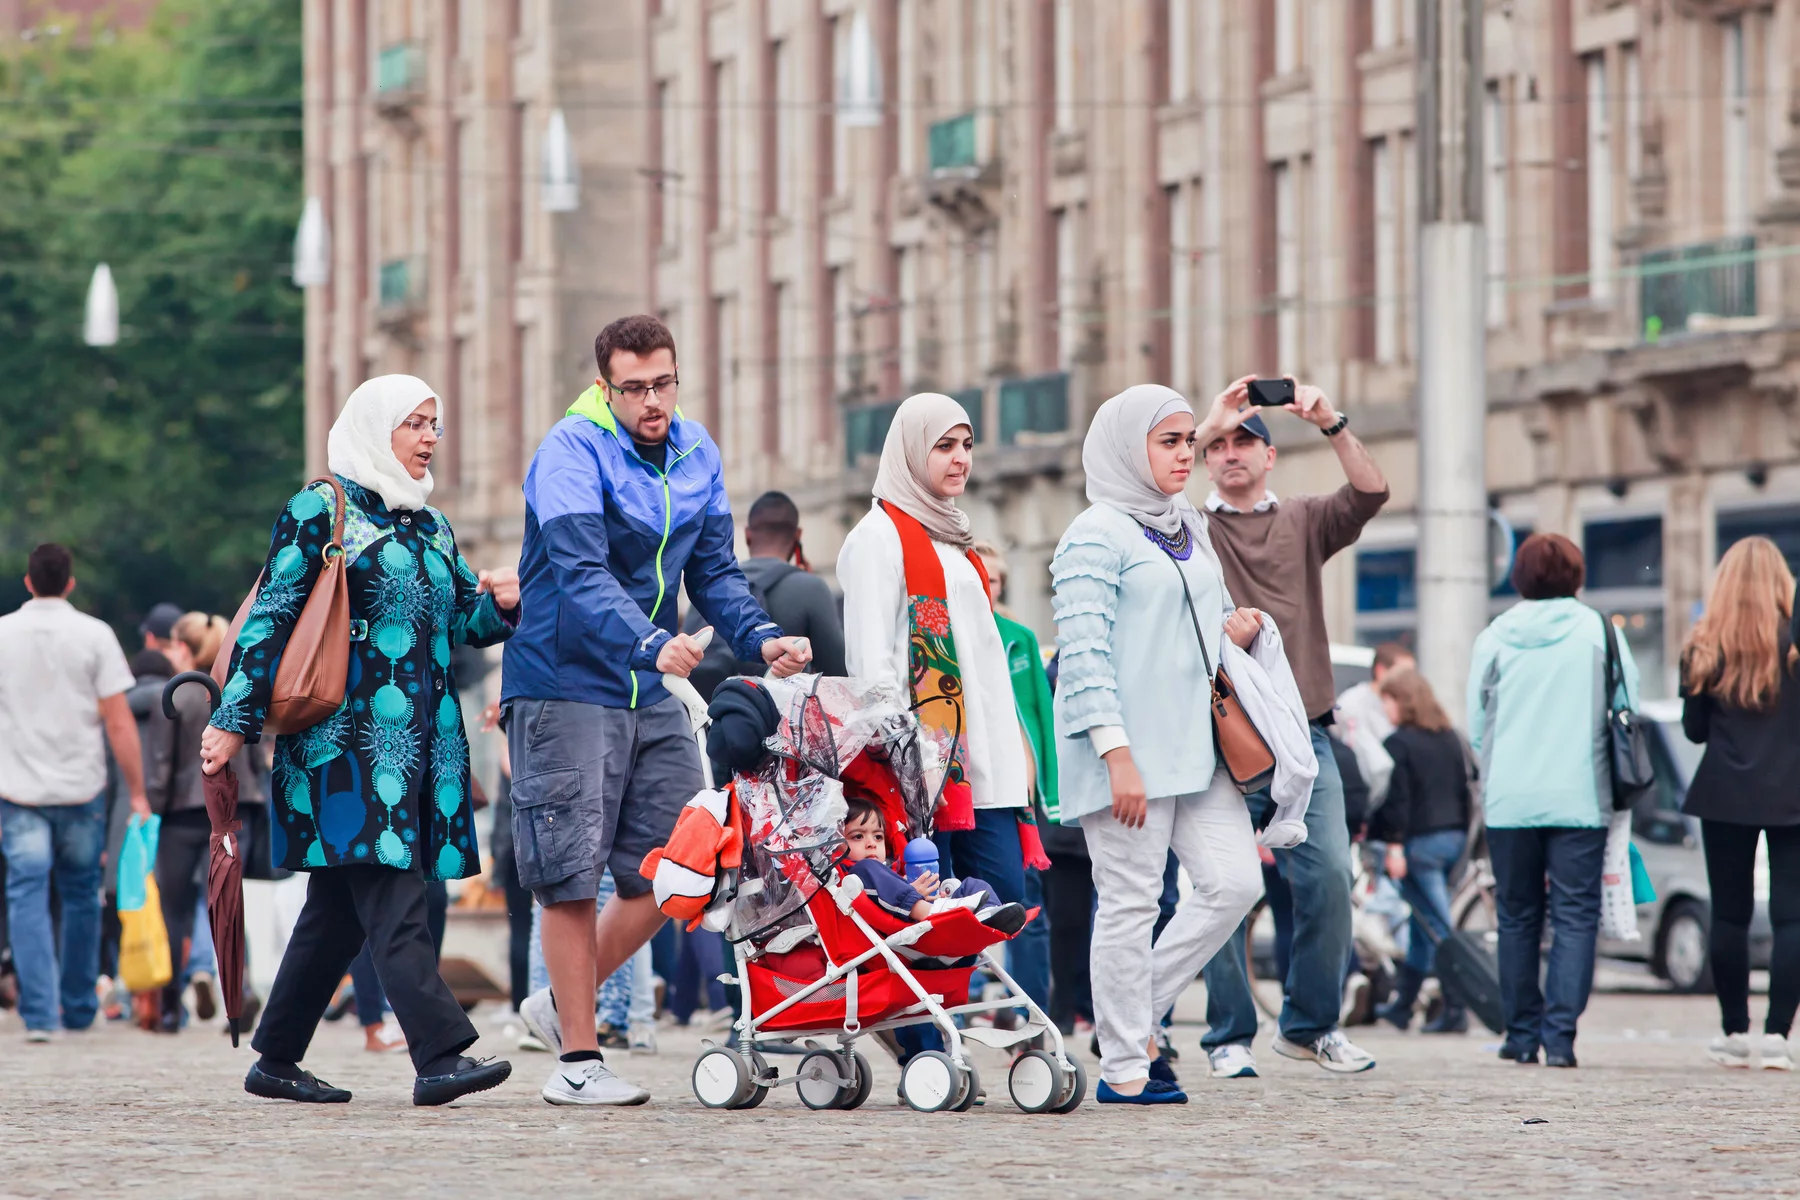 A Muslim family in Amsterdam